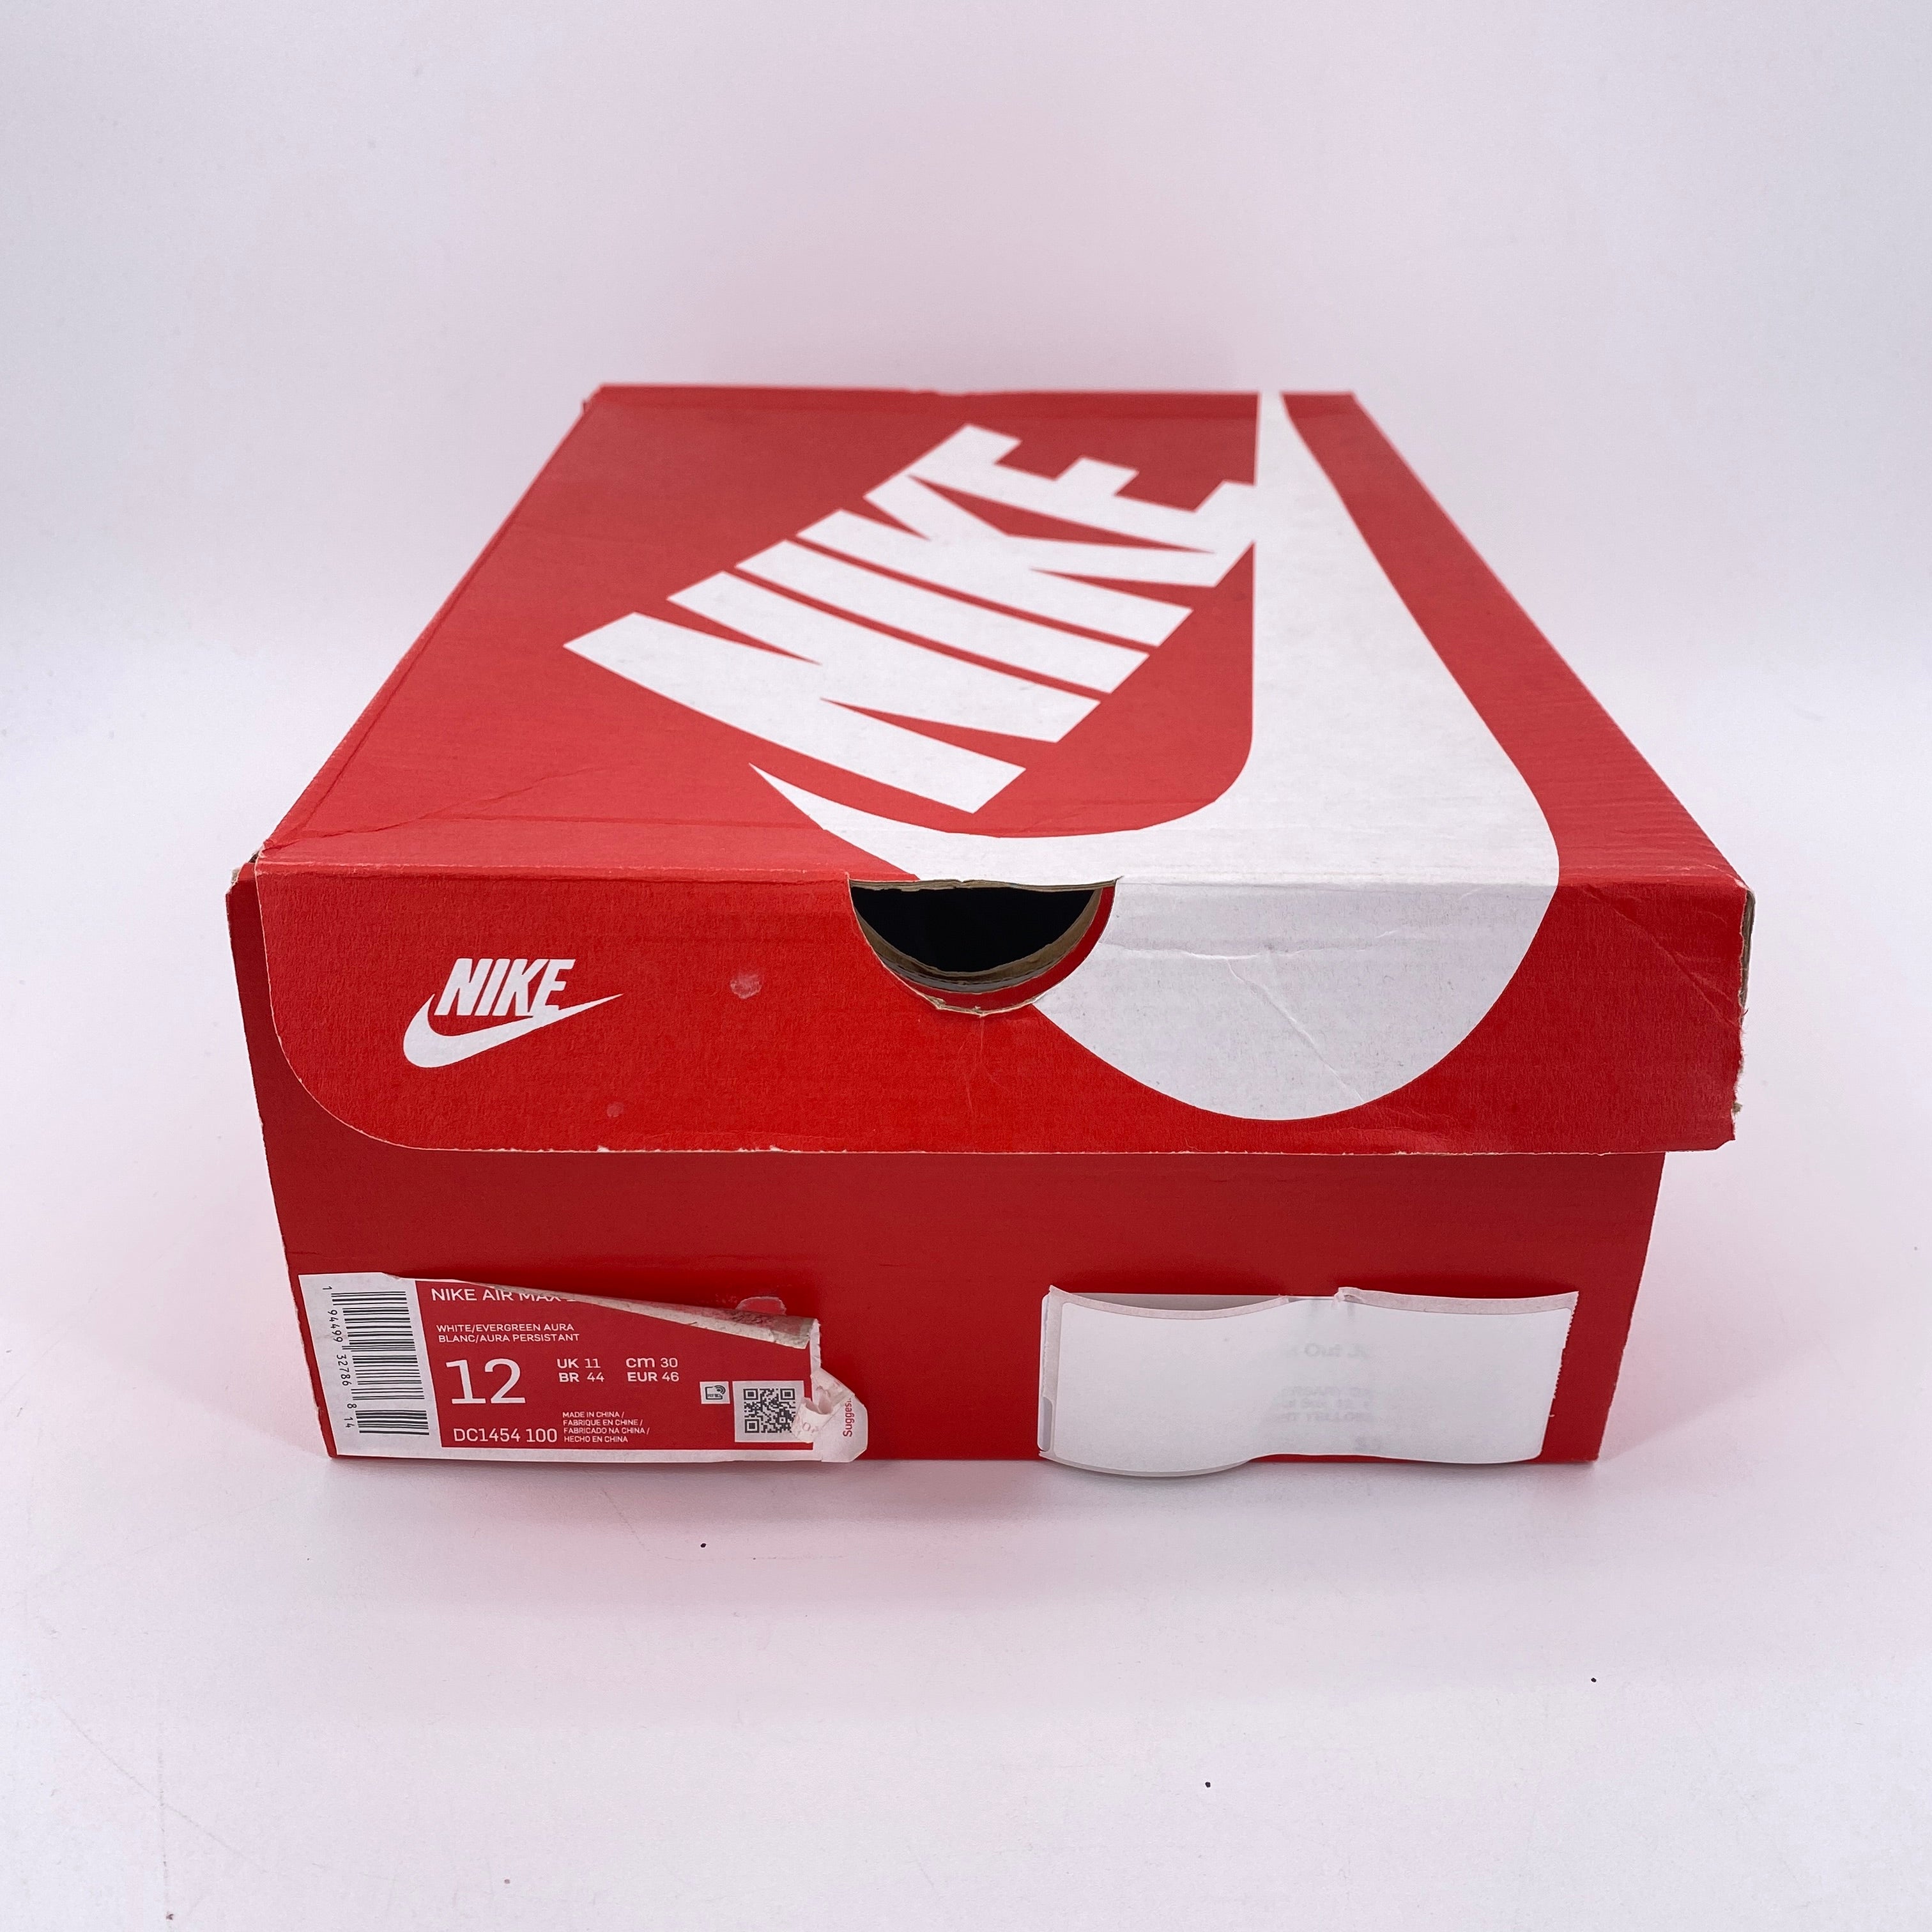 Nike Air Max 1 "Anniversary Green" 2020 New Size 12